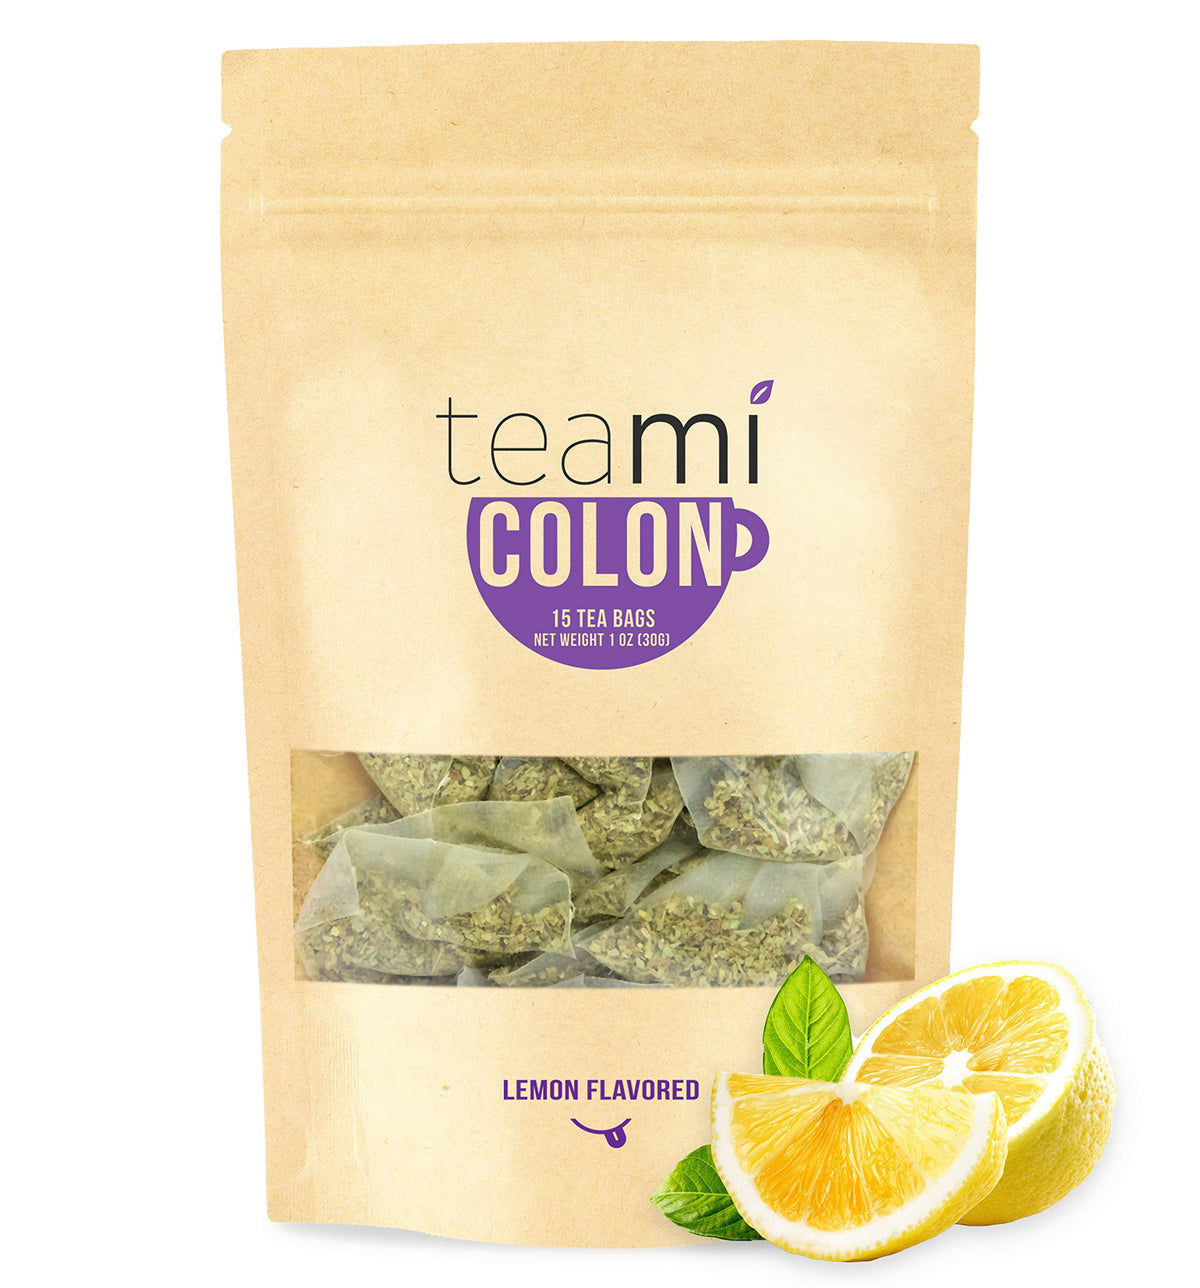 TeamiÃƒÆ’Ã¢â‚¬Å¡Ãƒâ€šÃ‚Â® Colon Cleanse Detox Tea - 15 Tea Bags, 30 Day Supply - Weight Loss Tea for Women Belly Fat - All Natural Detox Detox Tea for Body Cleanse (Lemon)